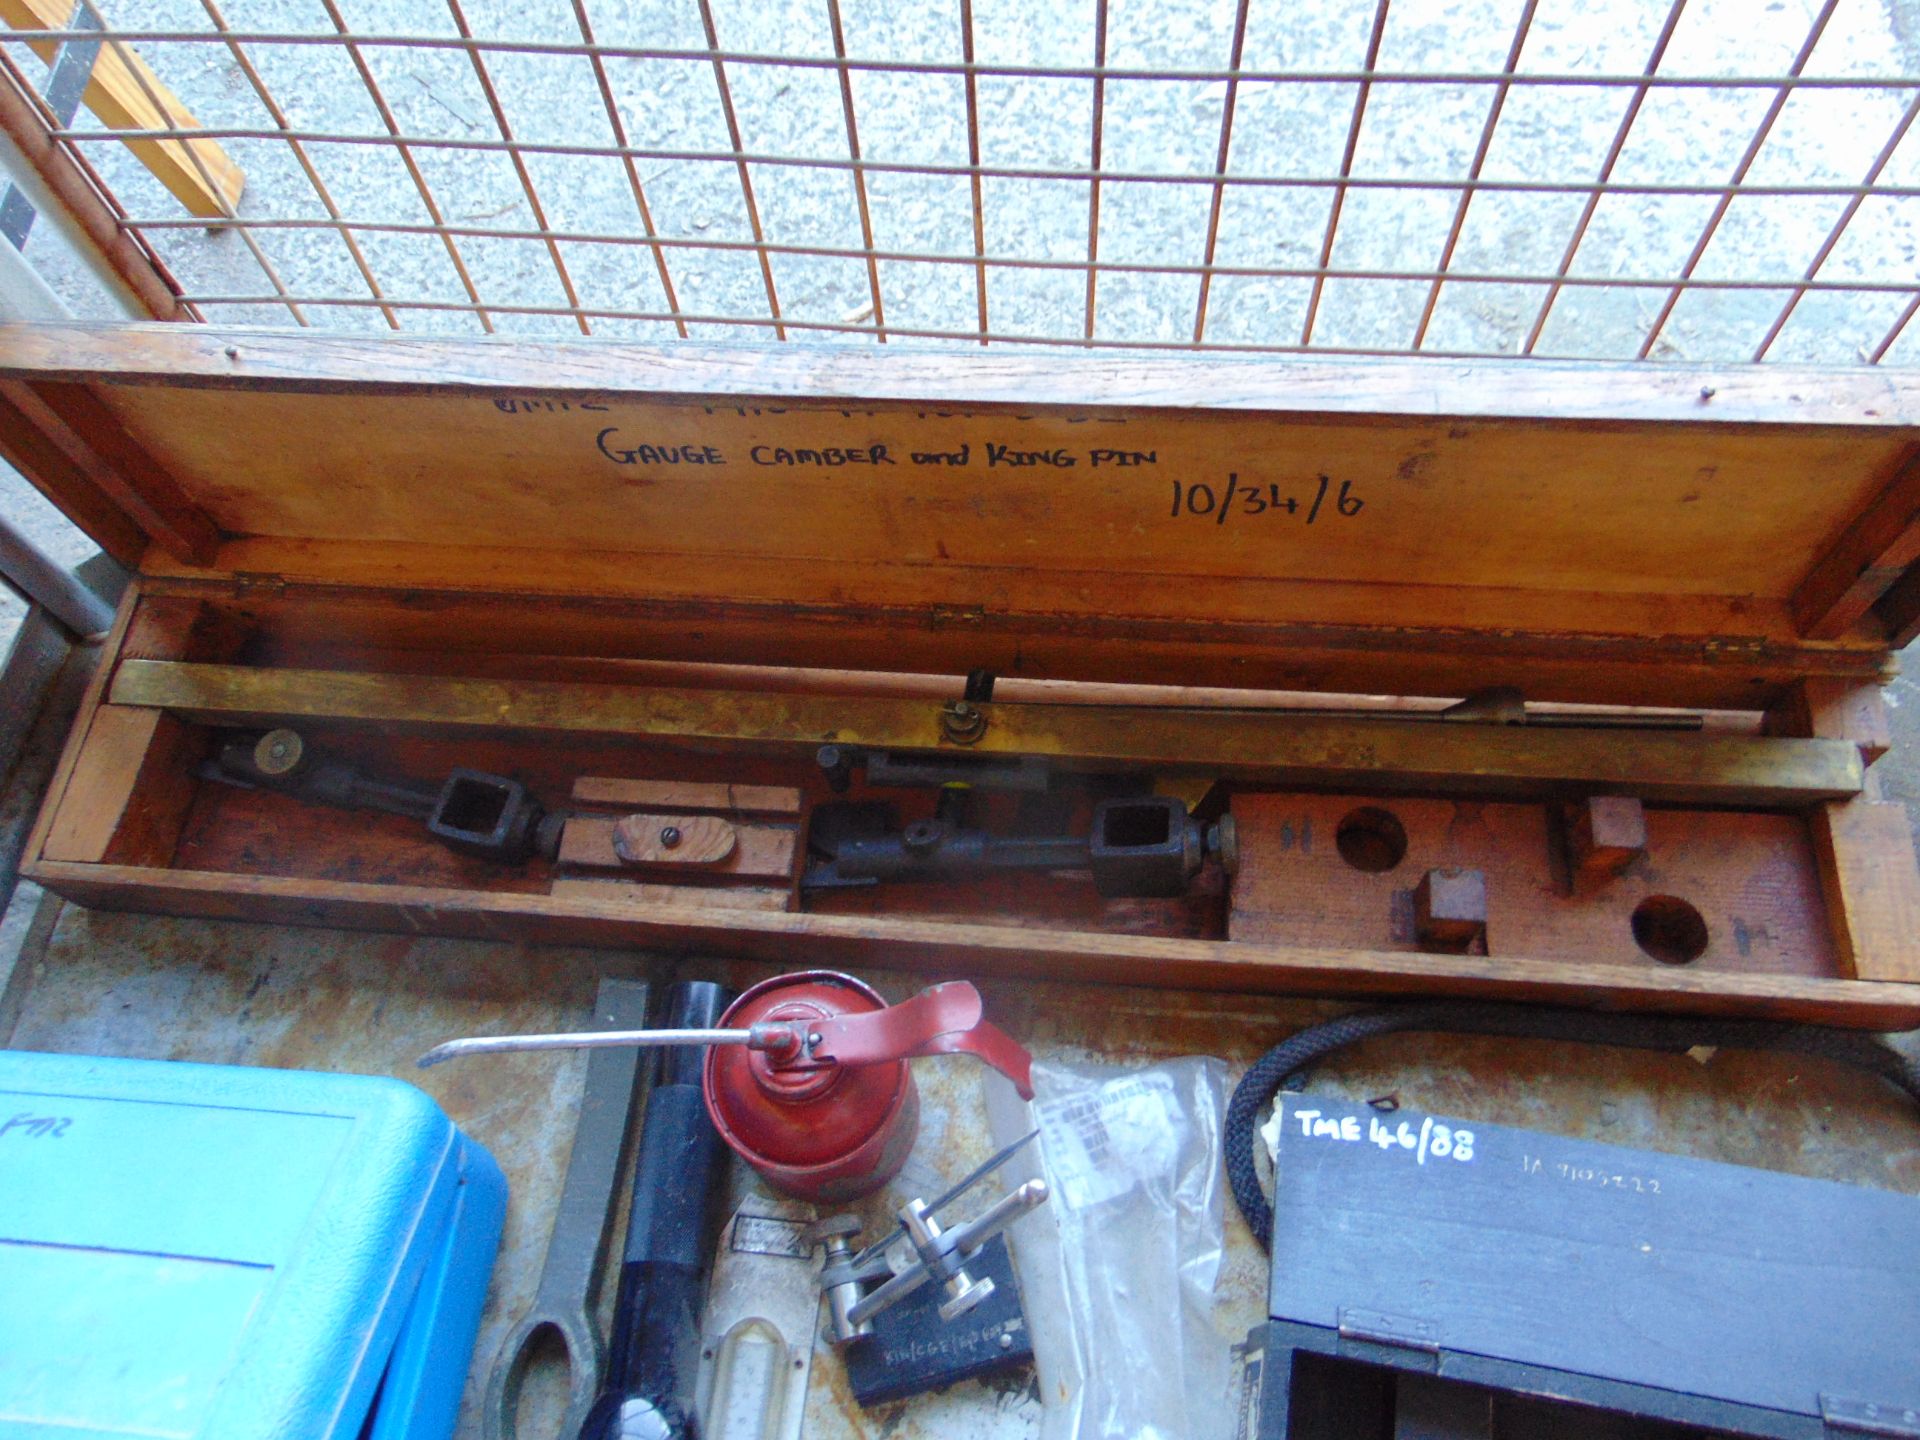 Stillage of Tools, Gauge Camber Kit, Lifting Bar etc - Image 5 of 7